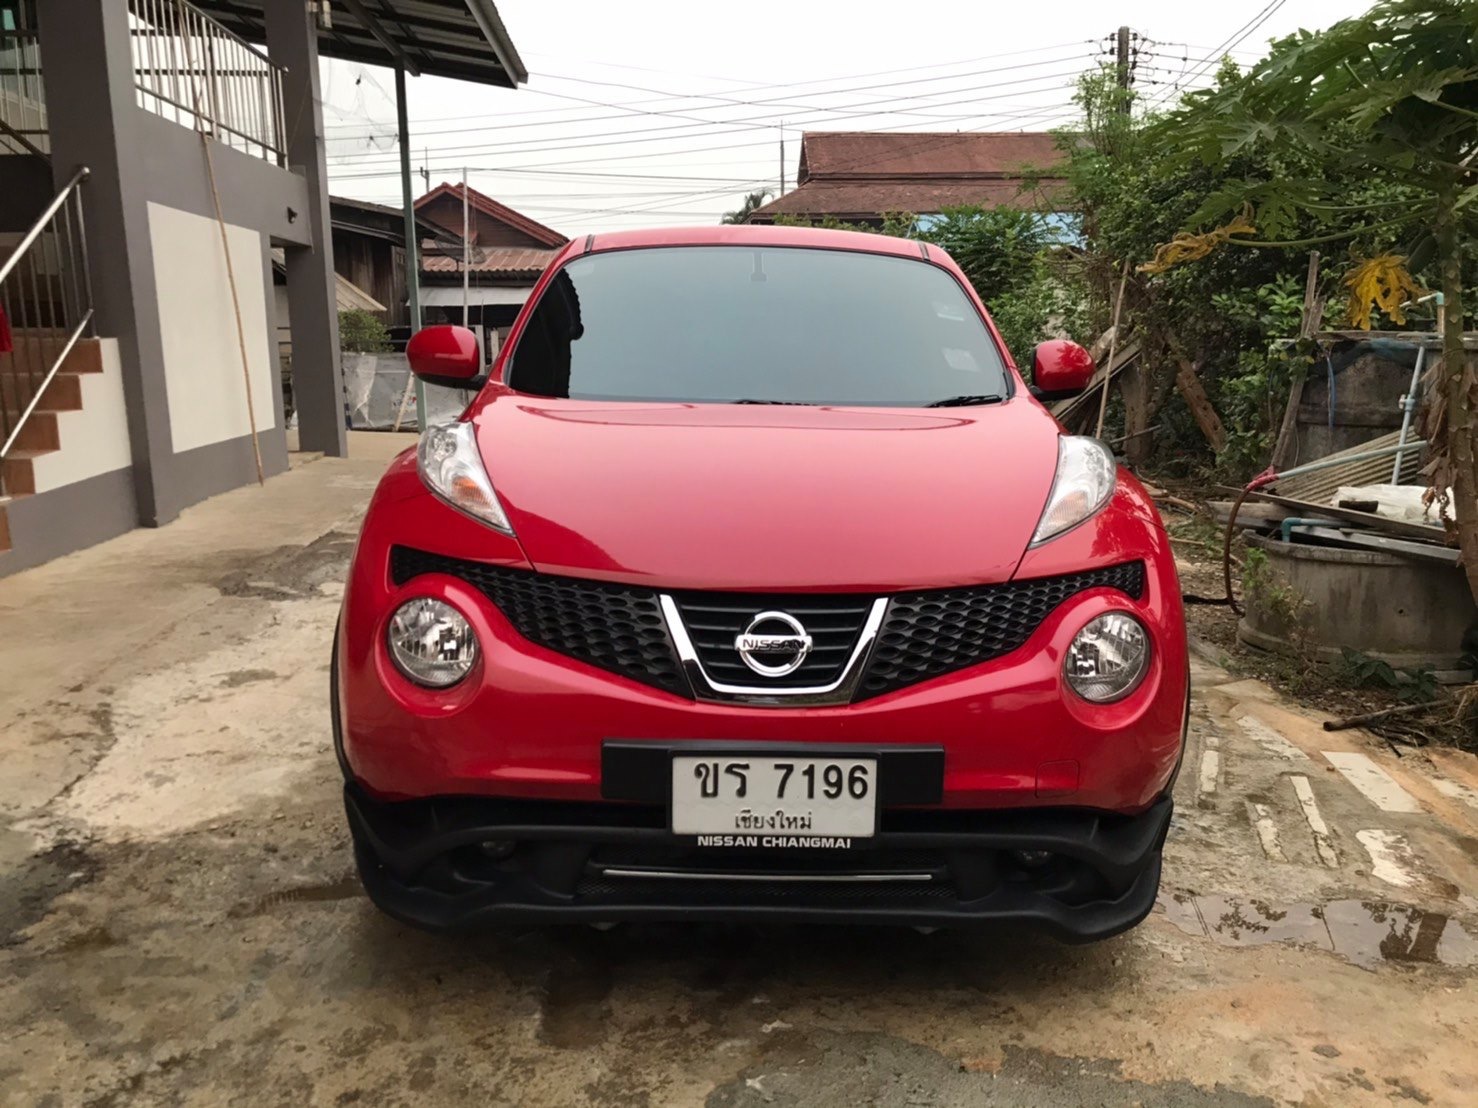 Nissan Juke ปี 2014 สีแดง